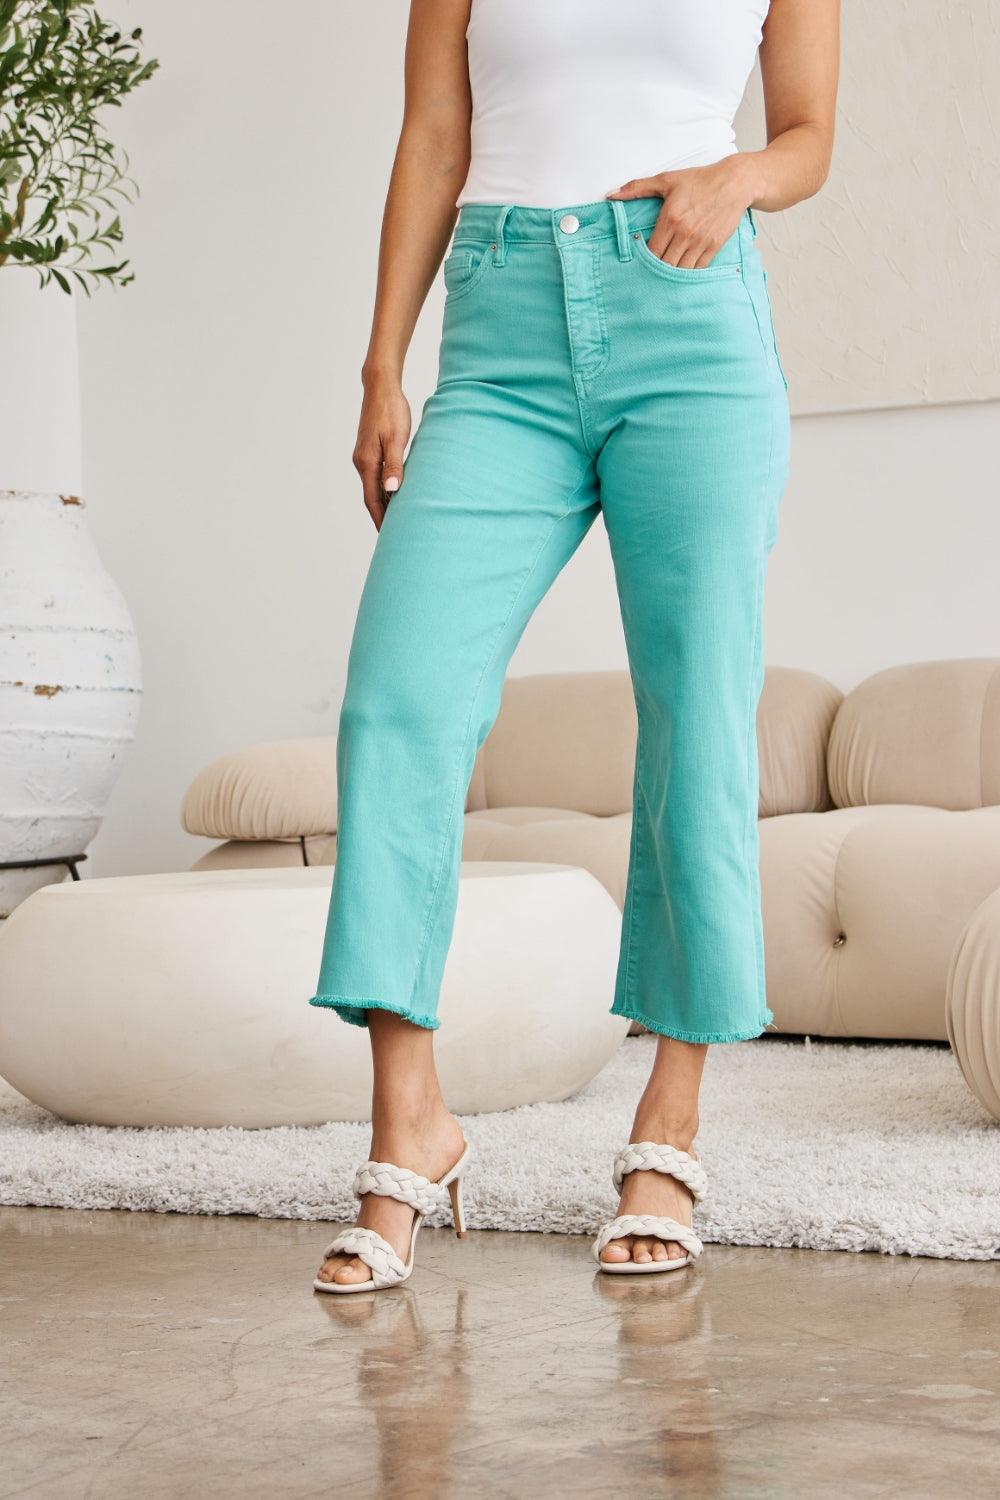 Bona Fide Fashion - Full Size Tummy Control High Waist Raw Hem Jeans - Women Fashion - Bona Fide Fashion